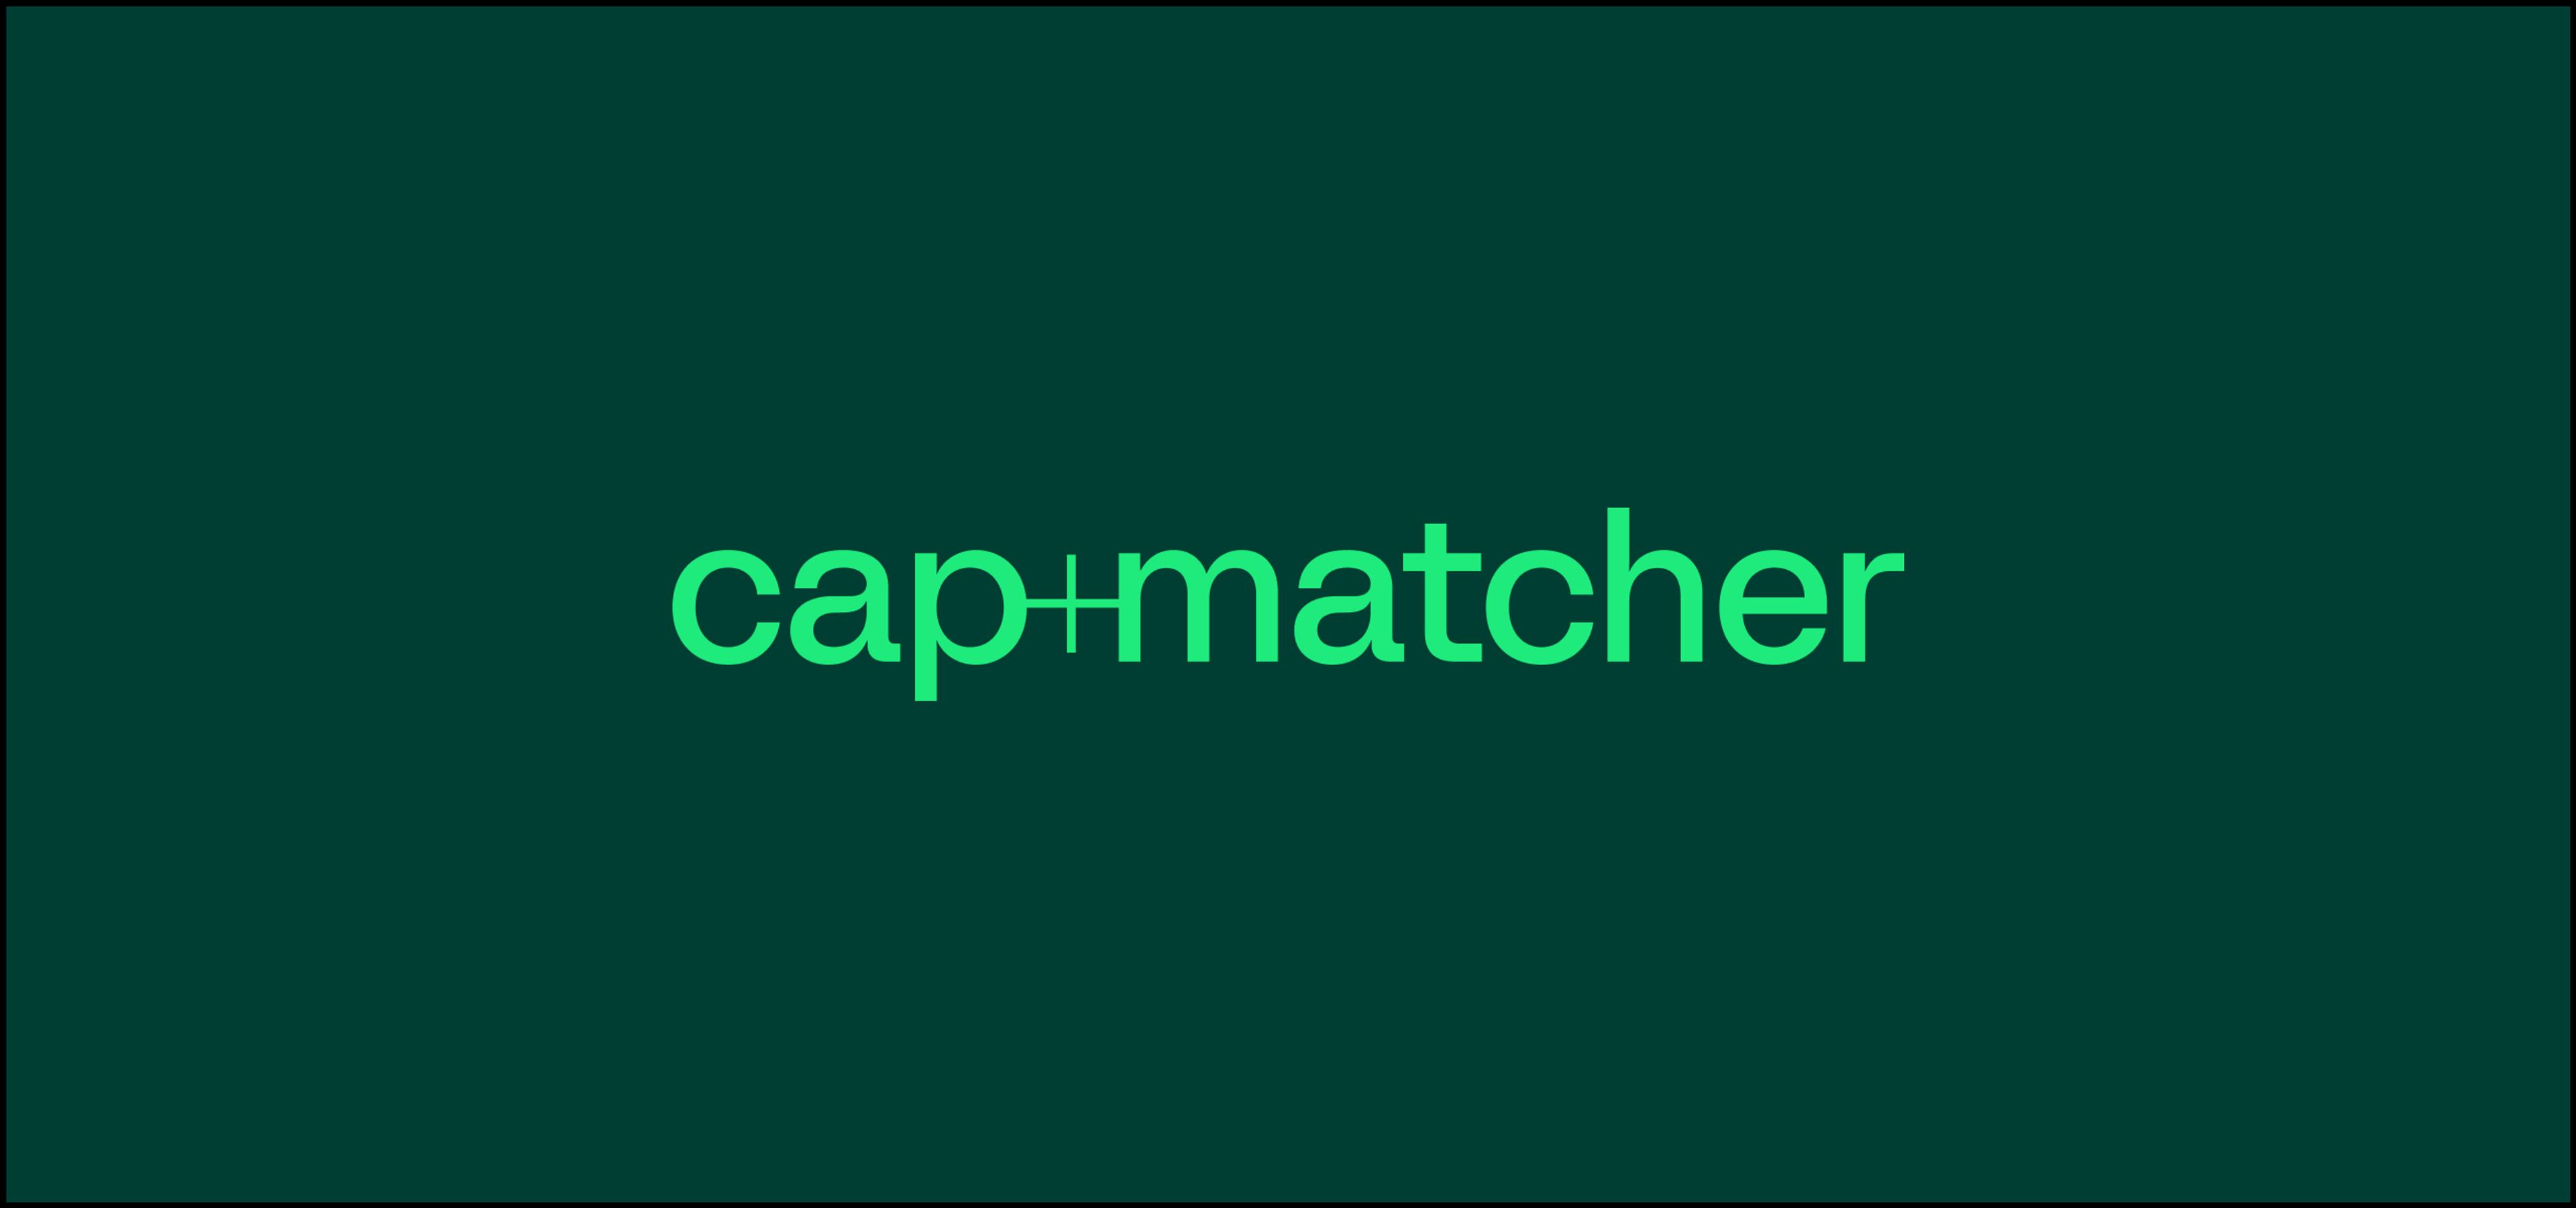 Capmatcher 2.0: Enhanced Investment Platform for Entrepreneurs and Investors